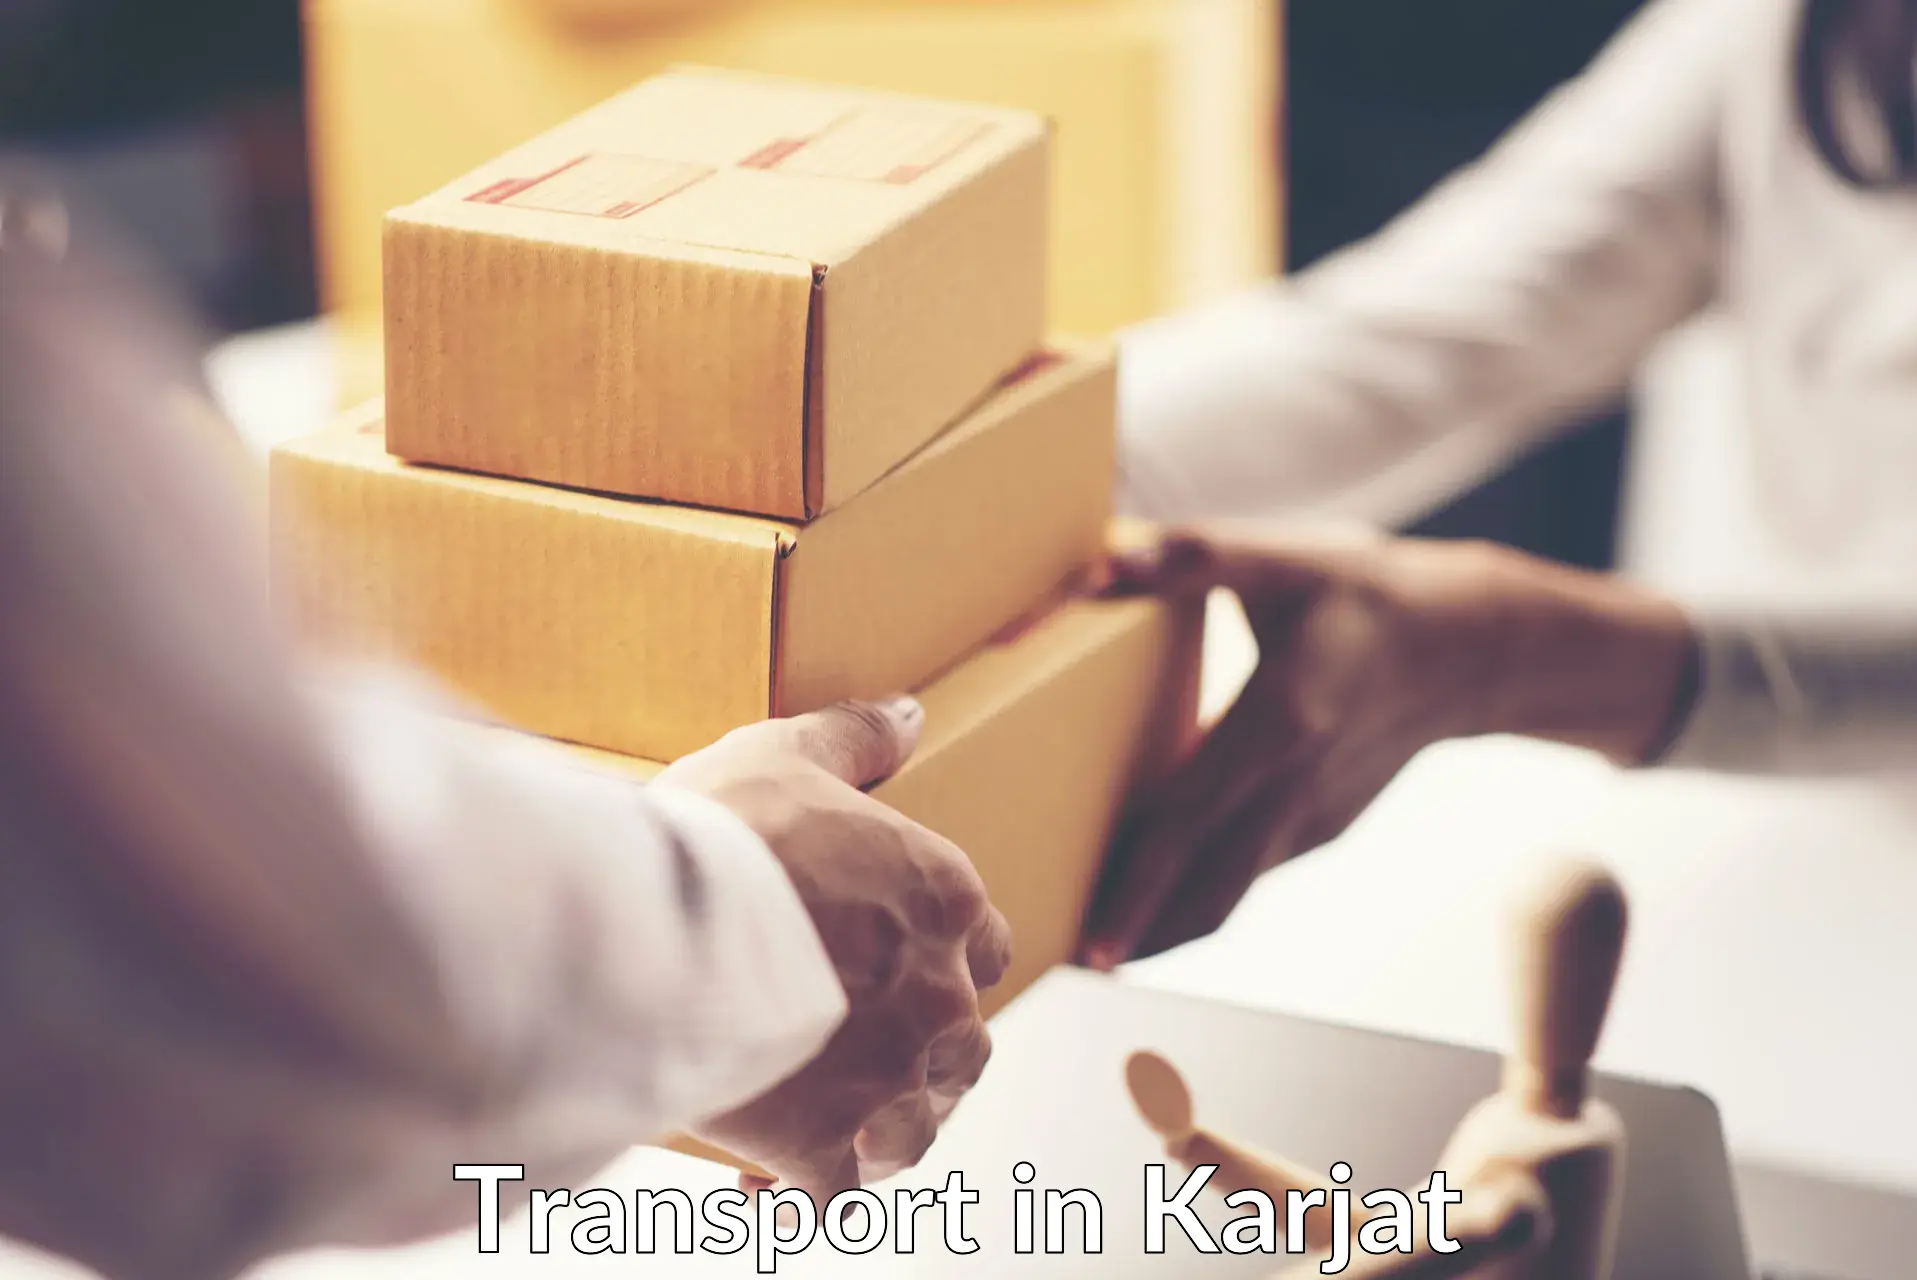 Interstate goods transport in Karjat